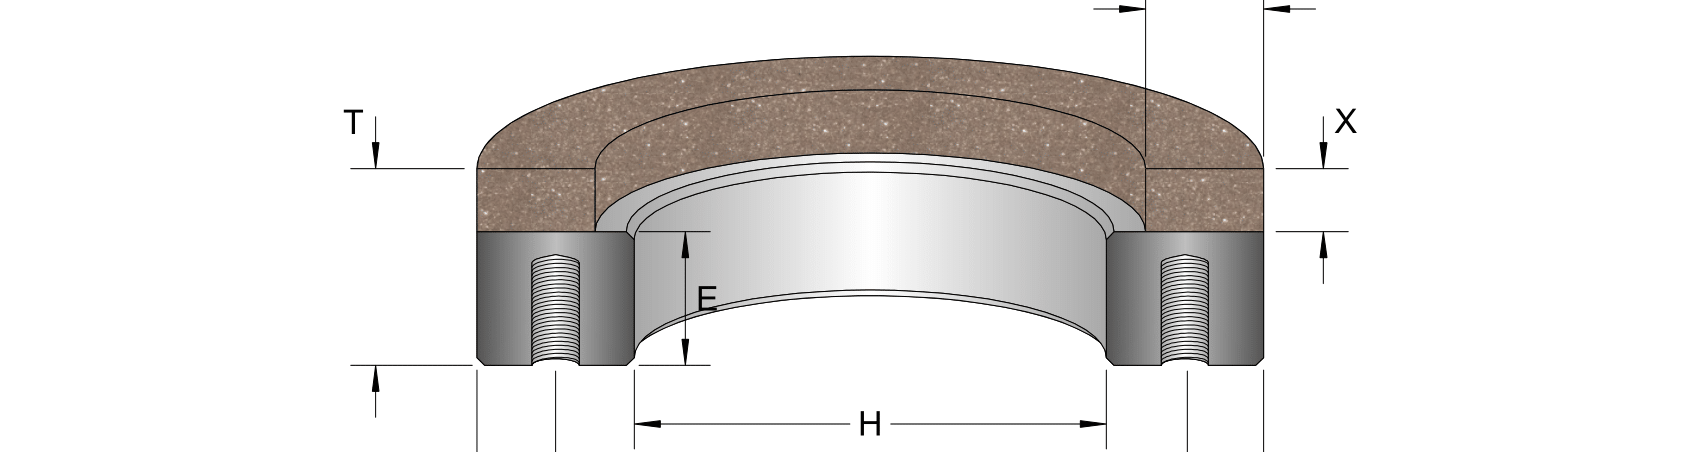 grinding wheel for carbide